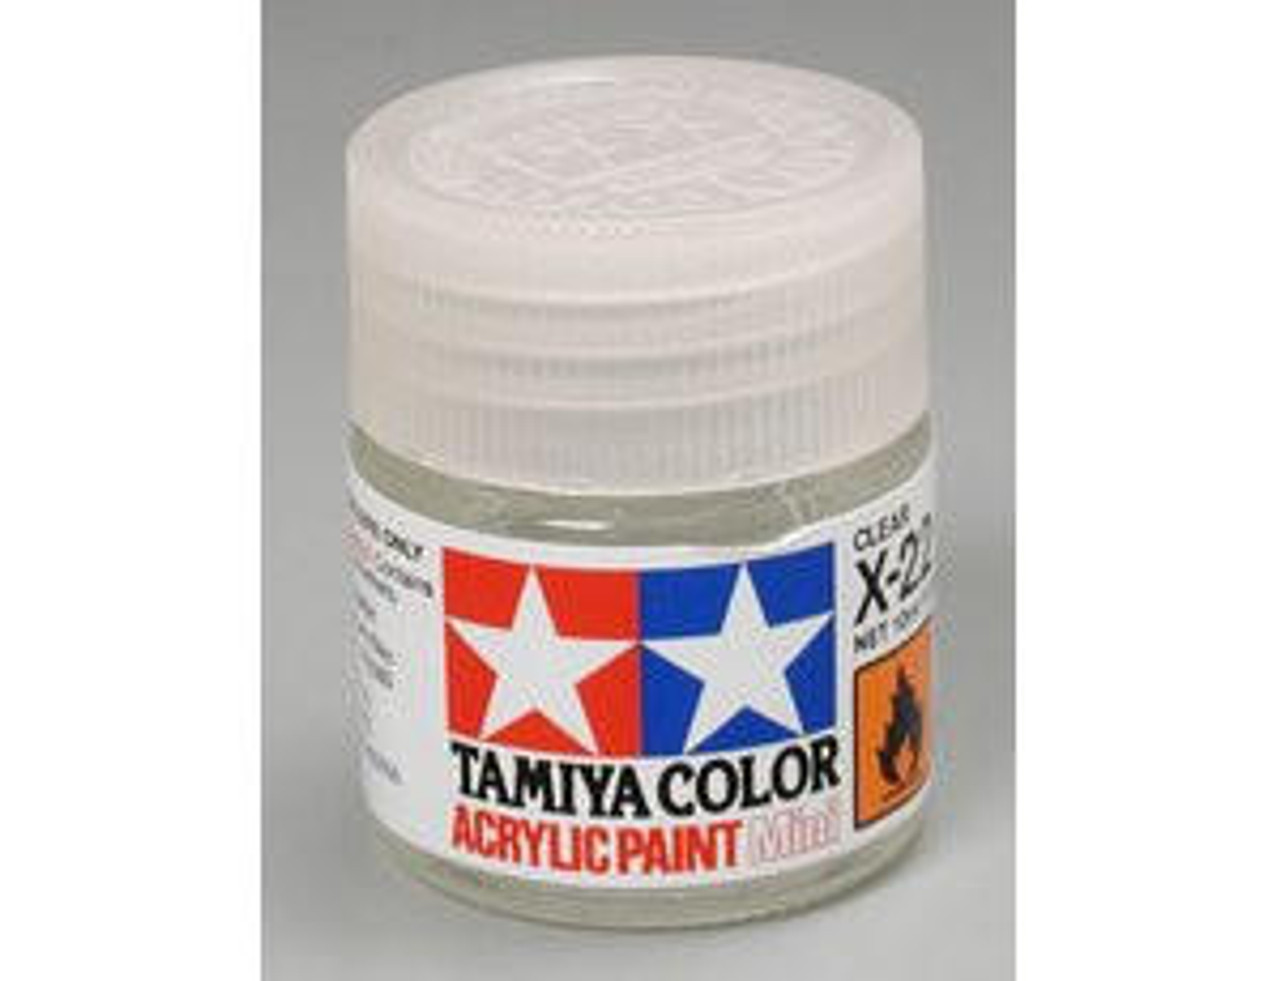 TAMIYA #81022: X-22 Acrylic Clear Coat, 23ml Bottle